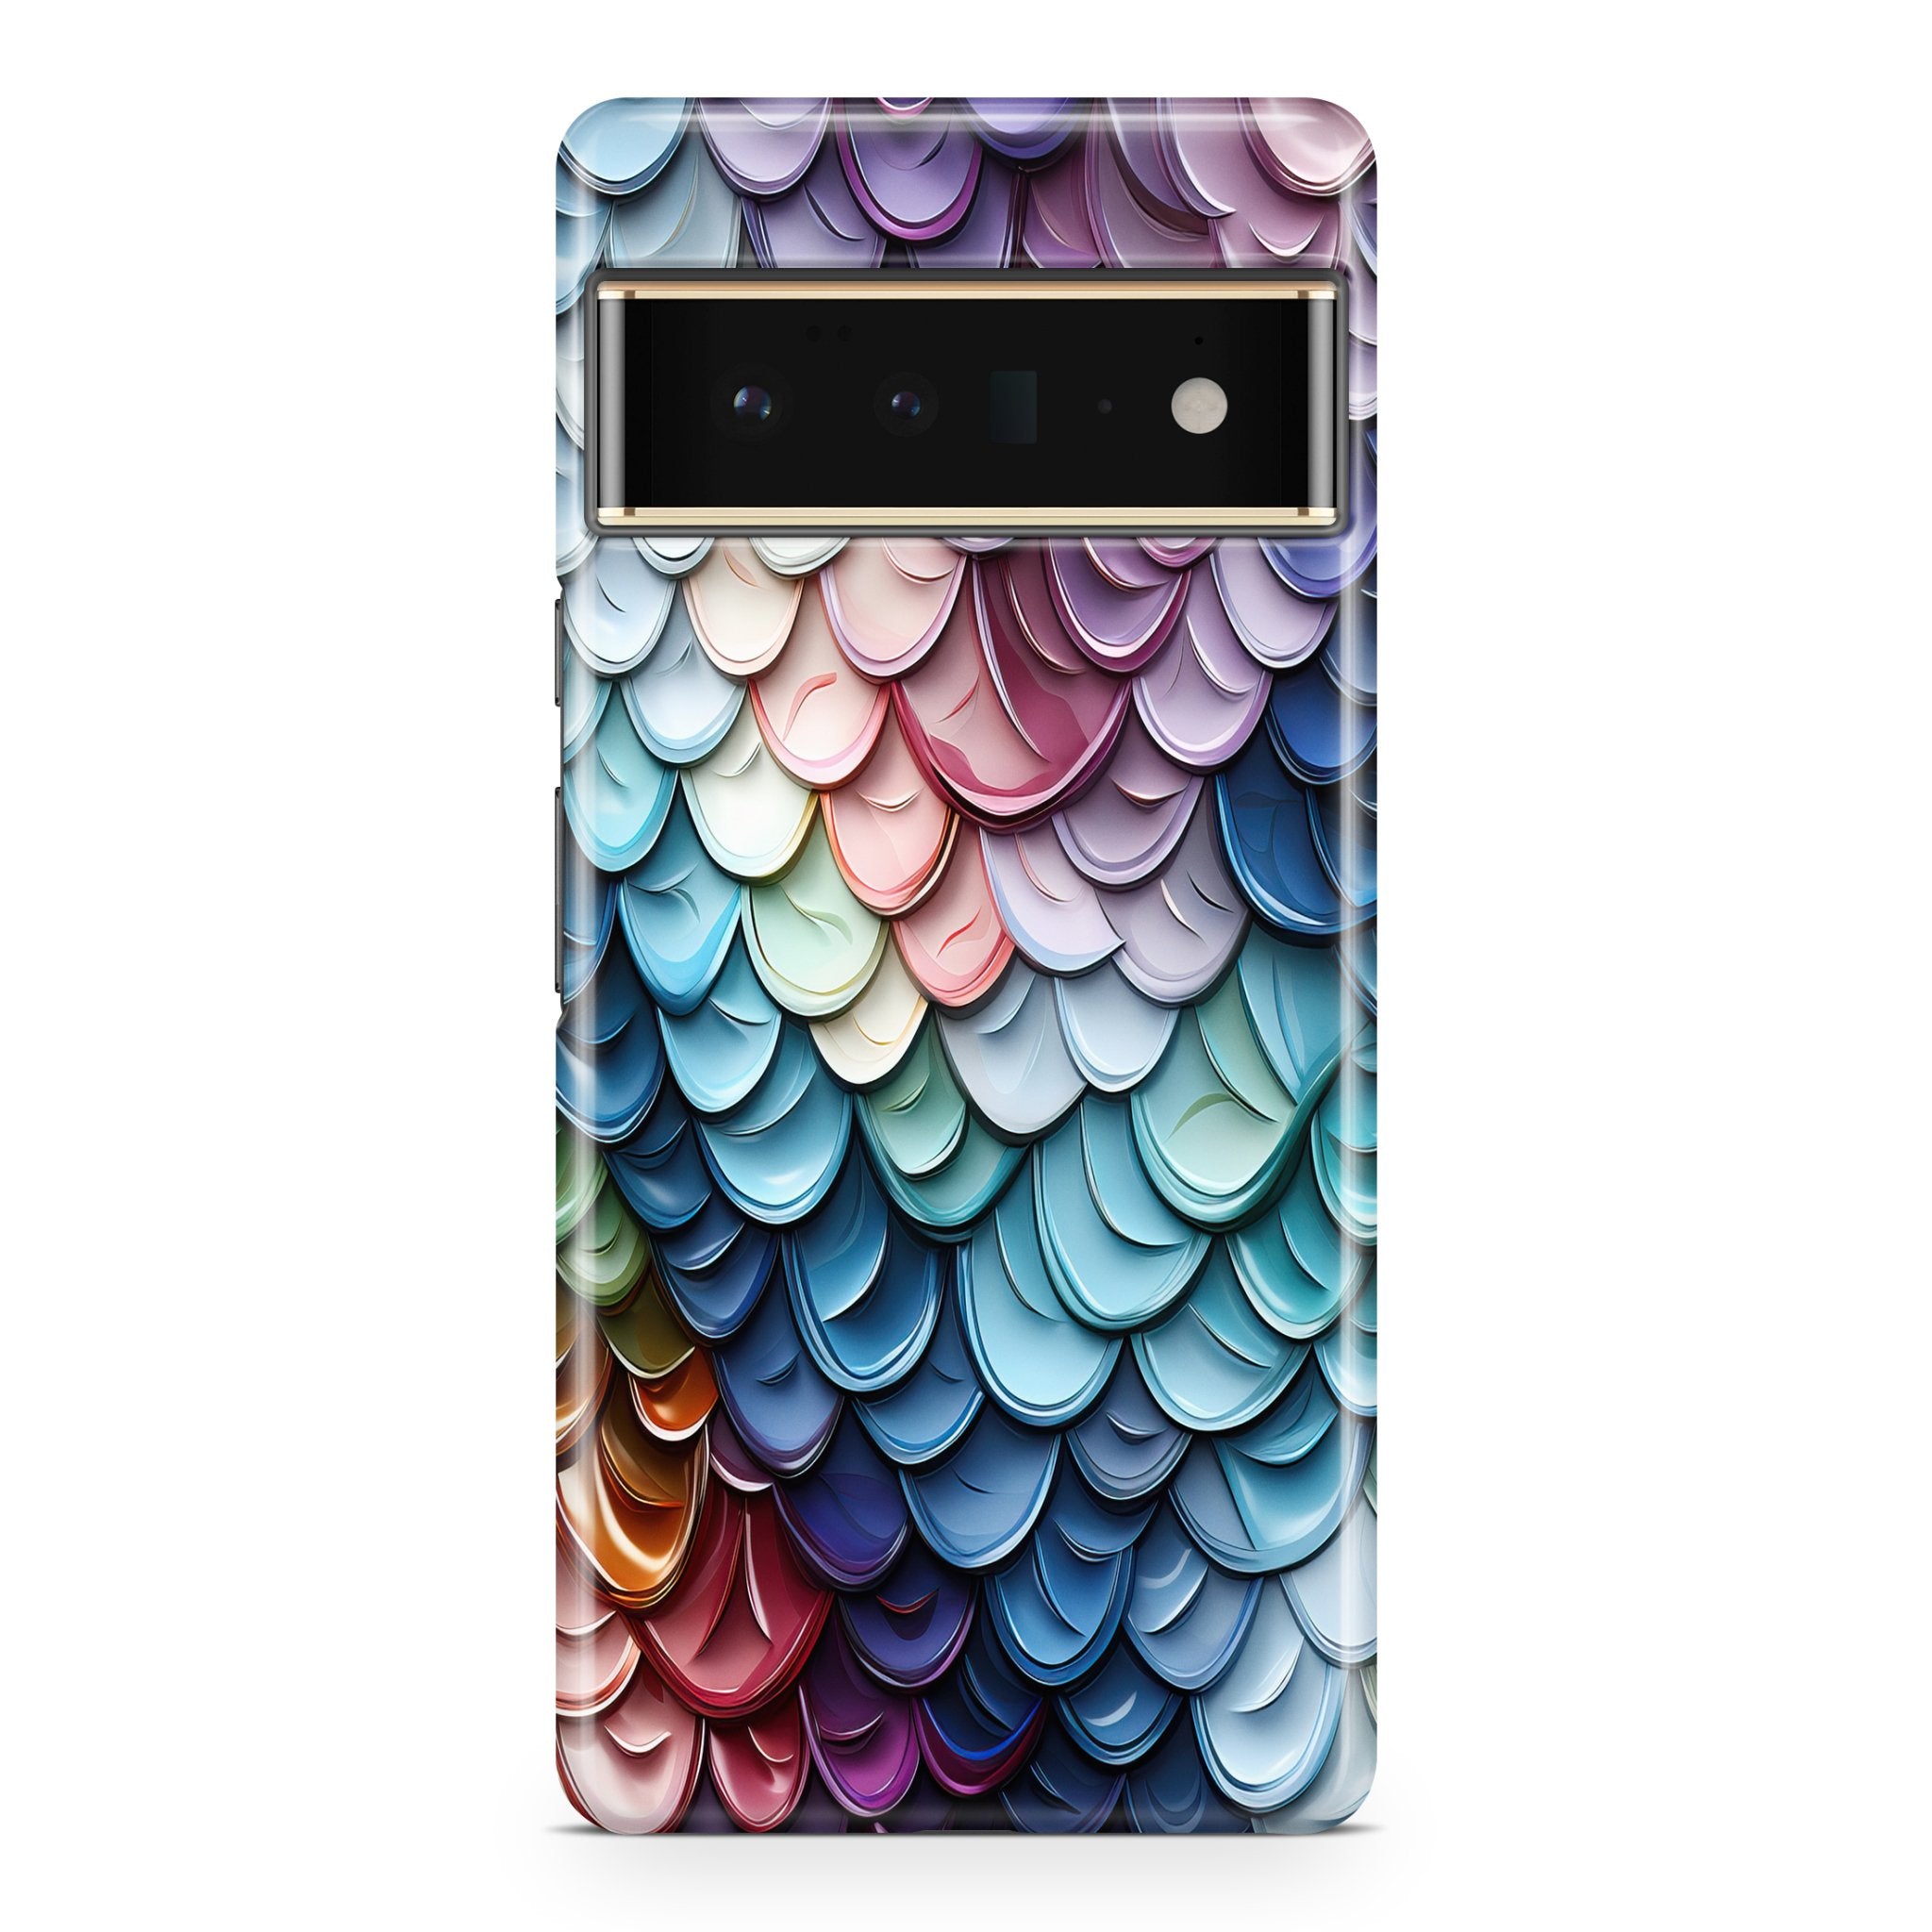 Chromatic Splendor - Google phone case designs by CaseSwagger